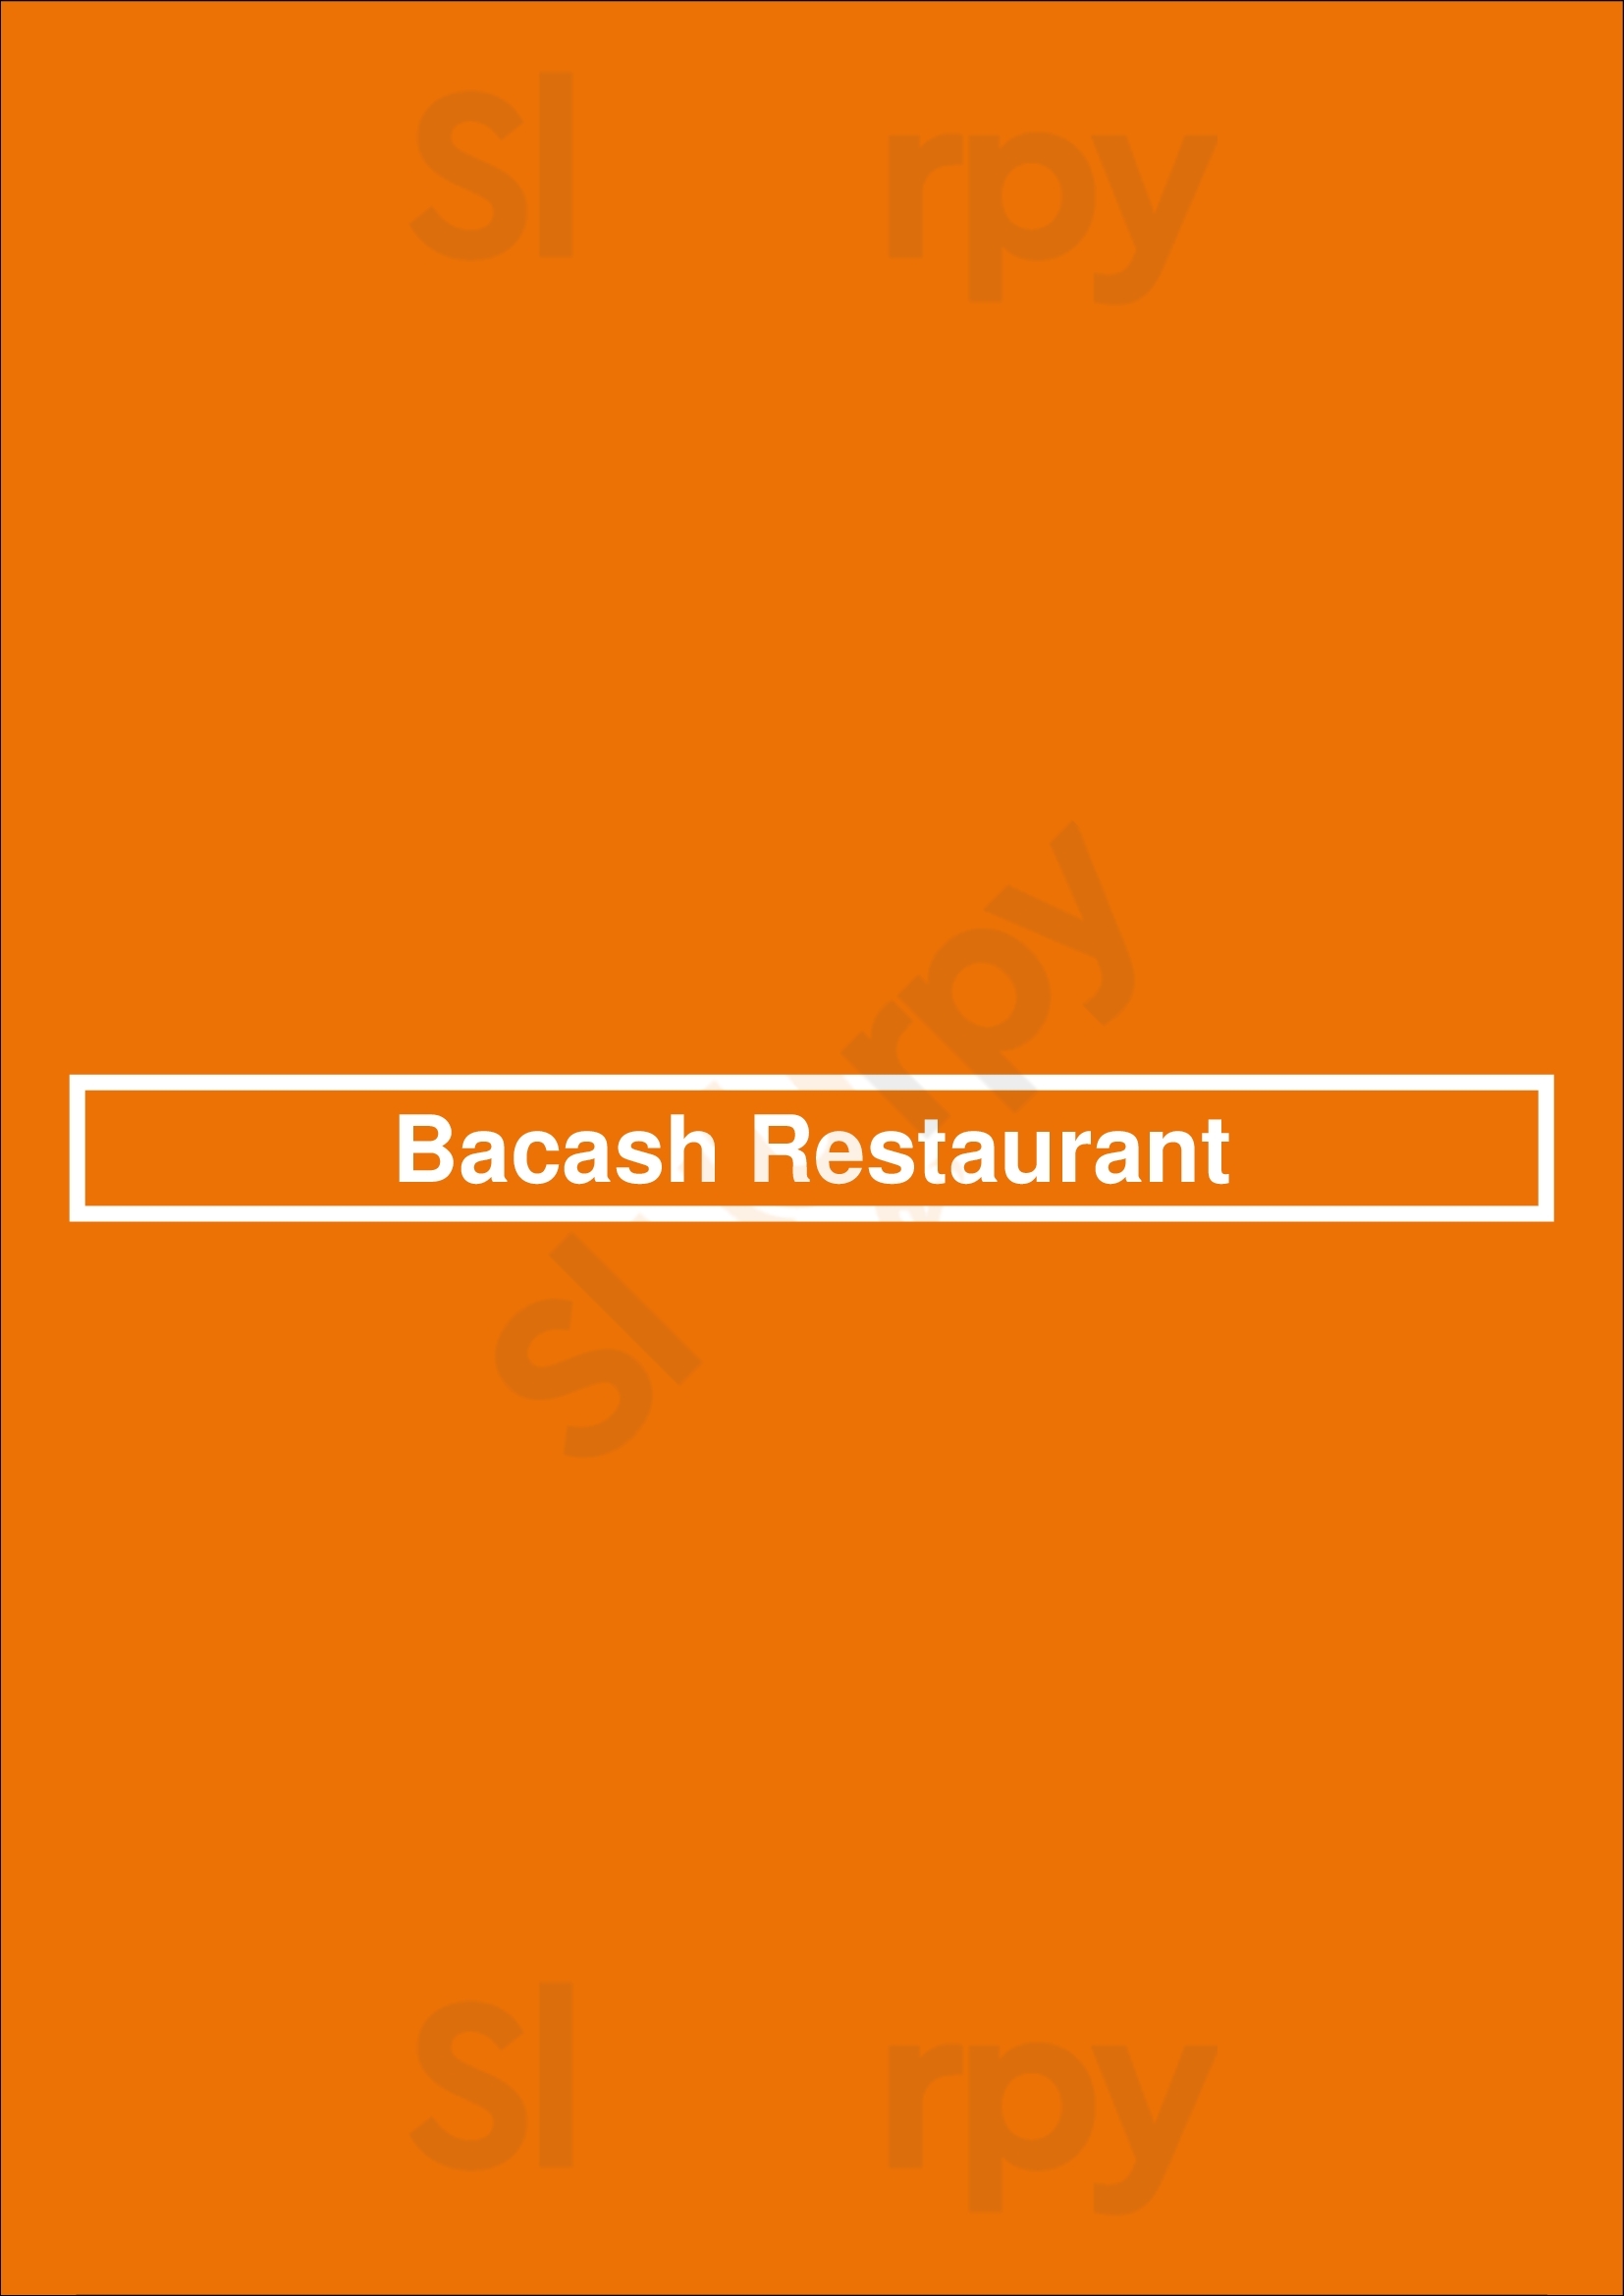 Bacash Restaurant Melbourne Menu - 1